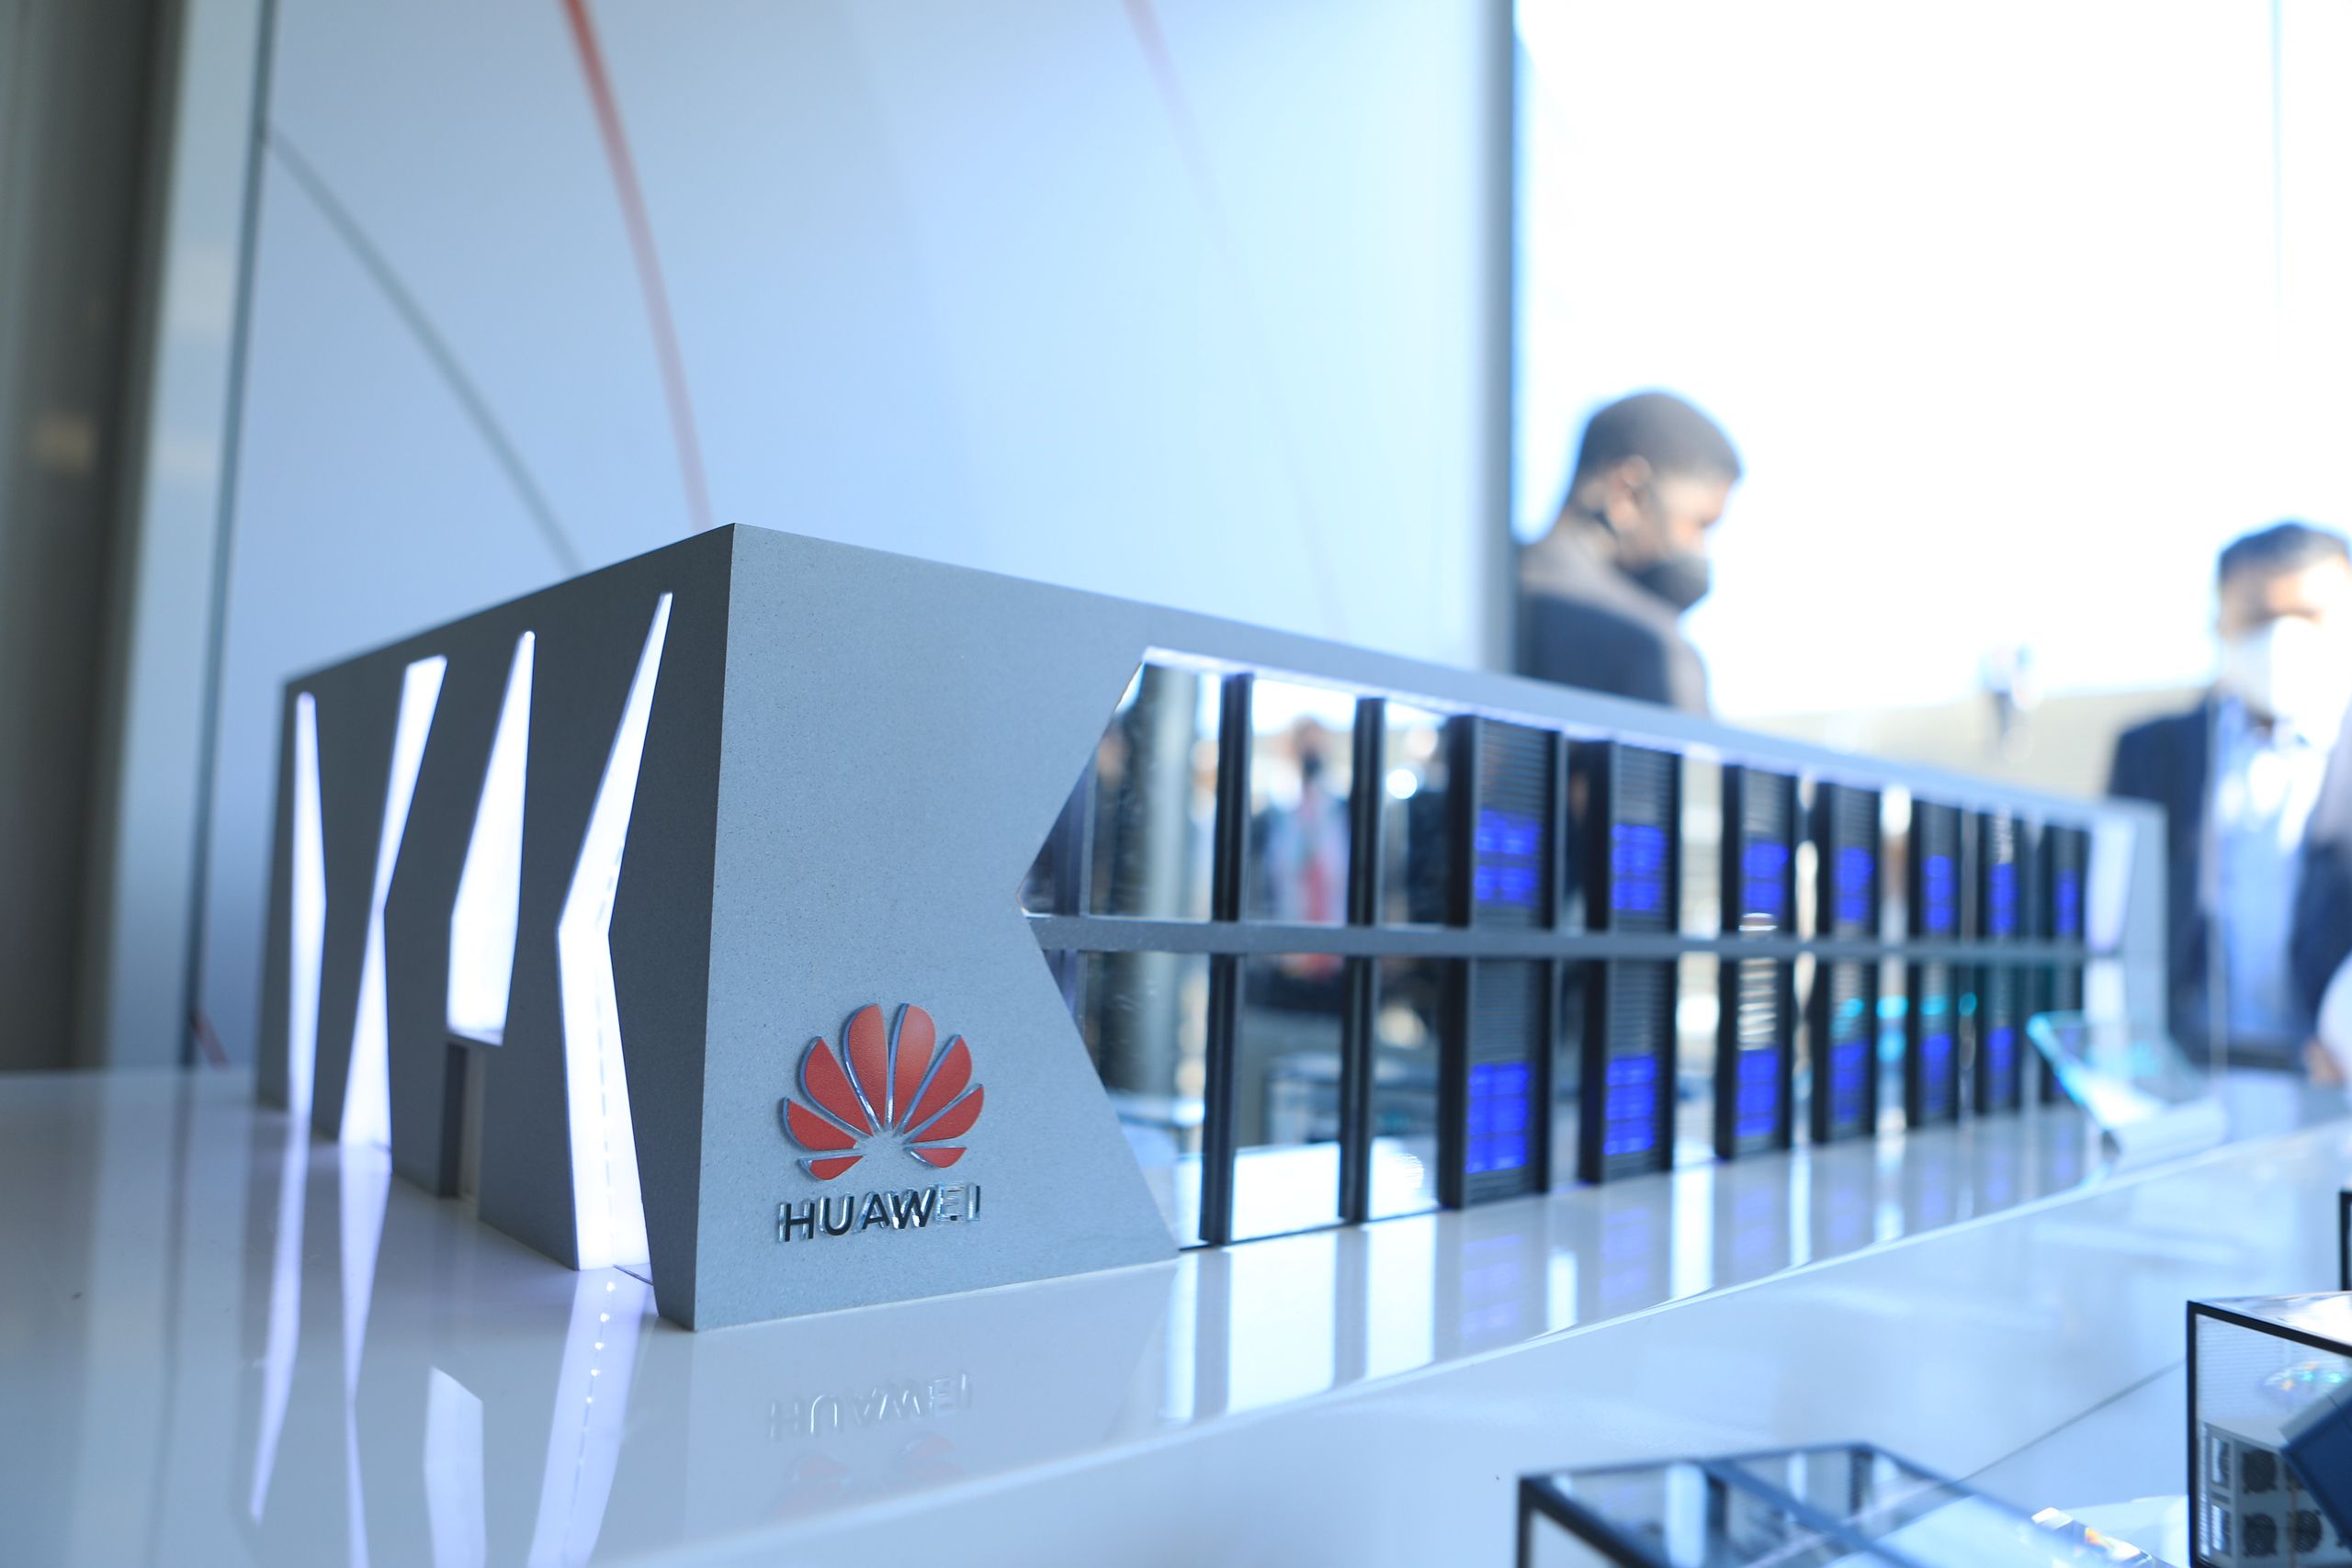 Huawei, referente mundial de los centros de datos